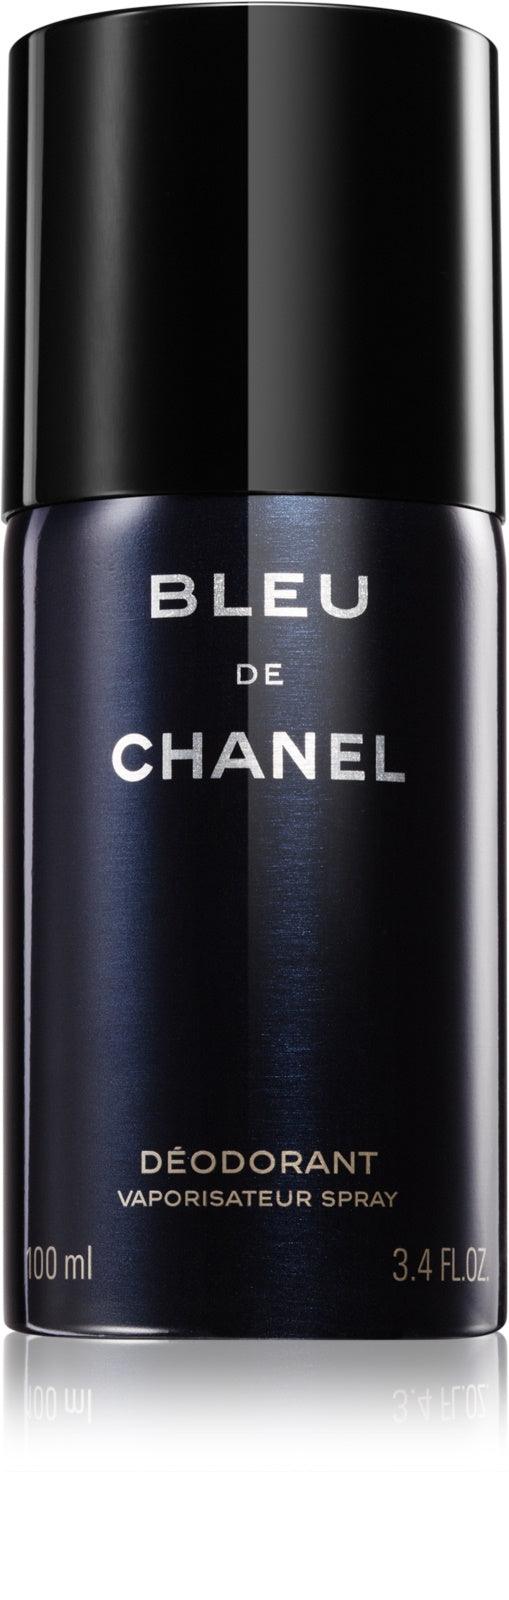 chanel bleu de deodorant spray, 3.4 oz